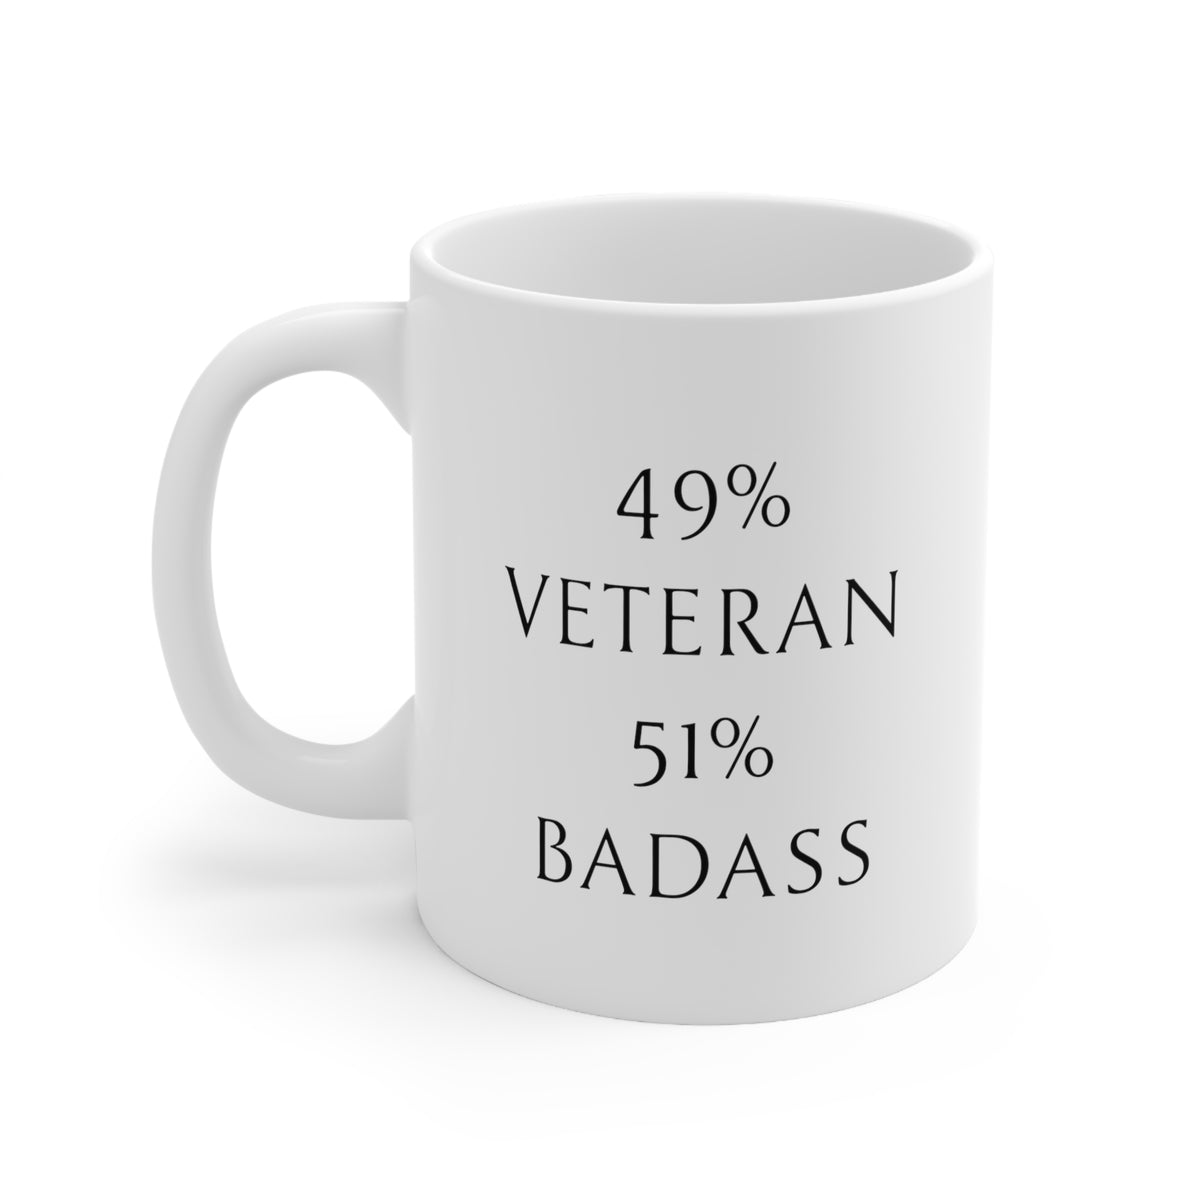 Veteran Coffee Mug - 49% Veteran 51% Badass - Funny Army Navy Vietnam Gifts For Men Women